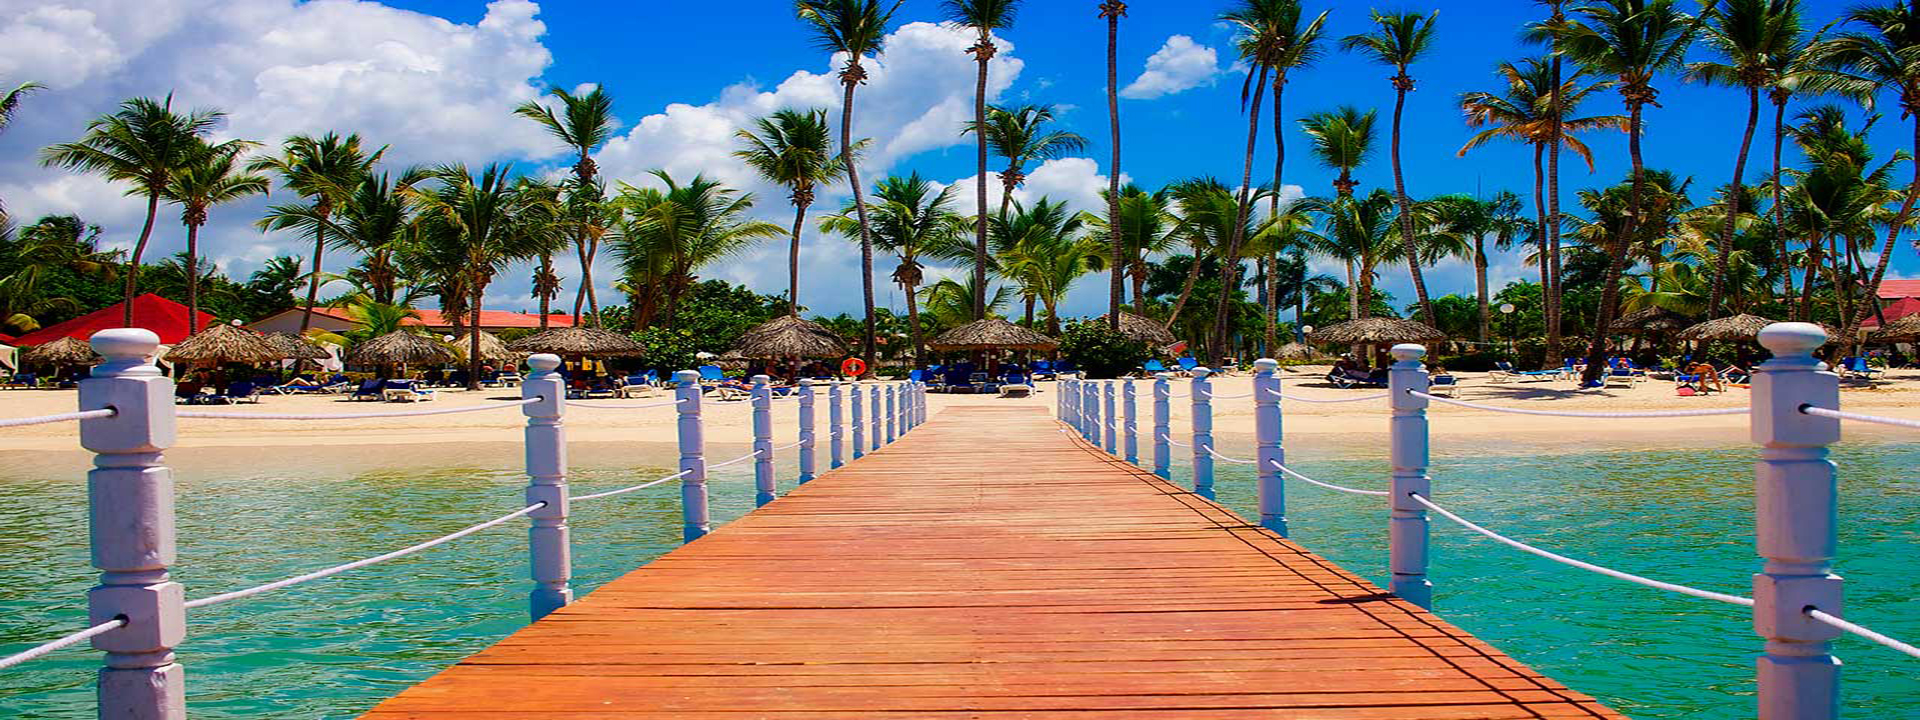 dominican republic tourism development